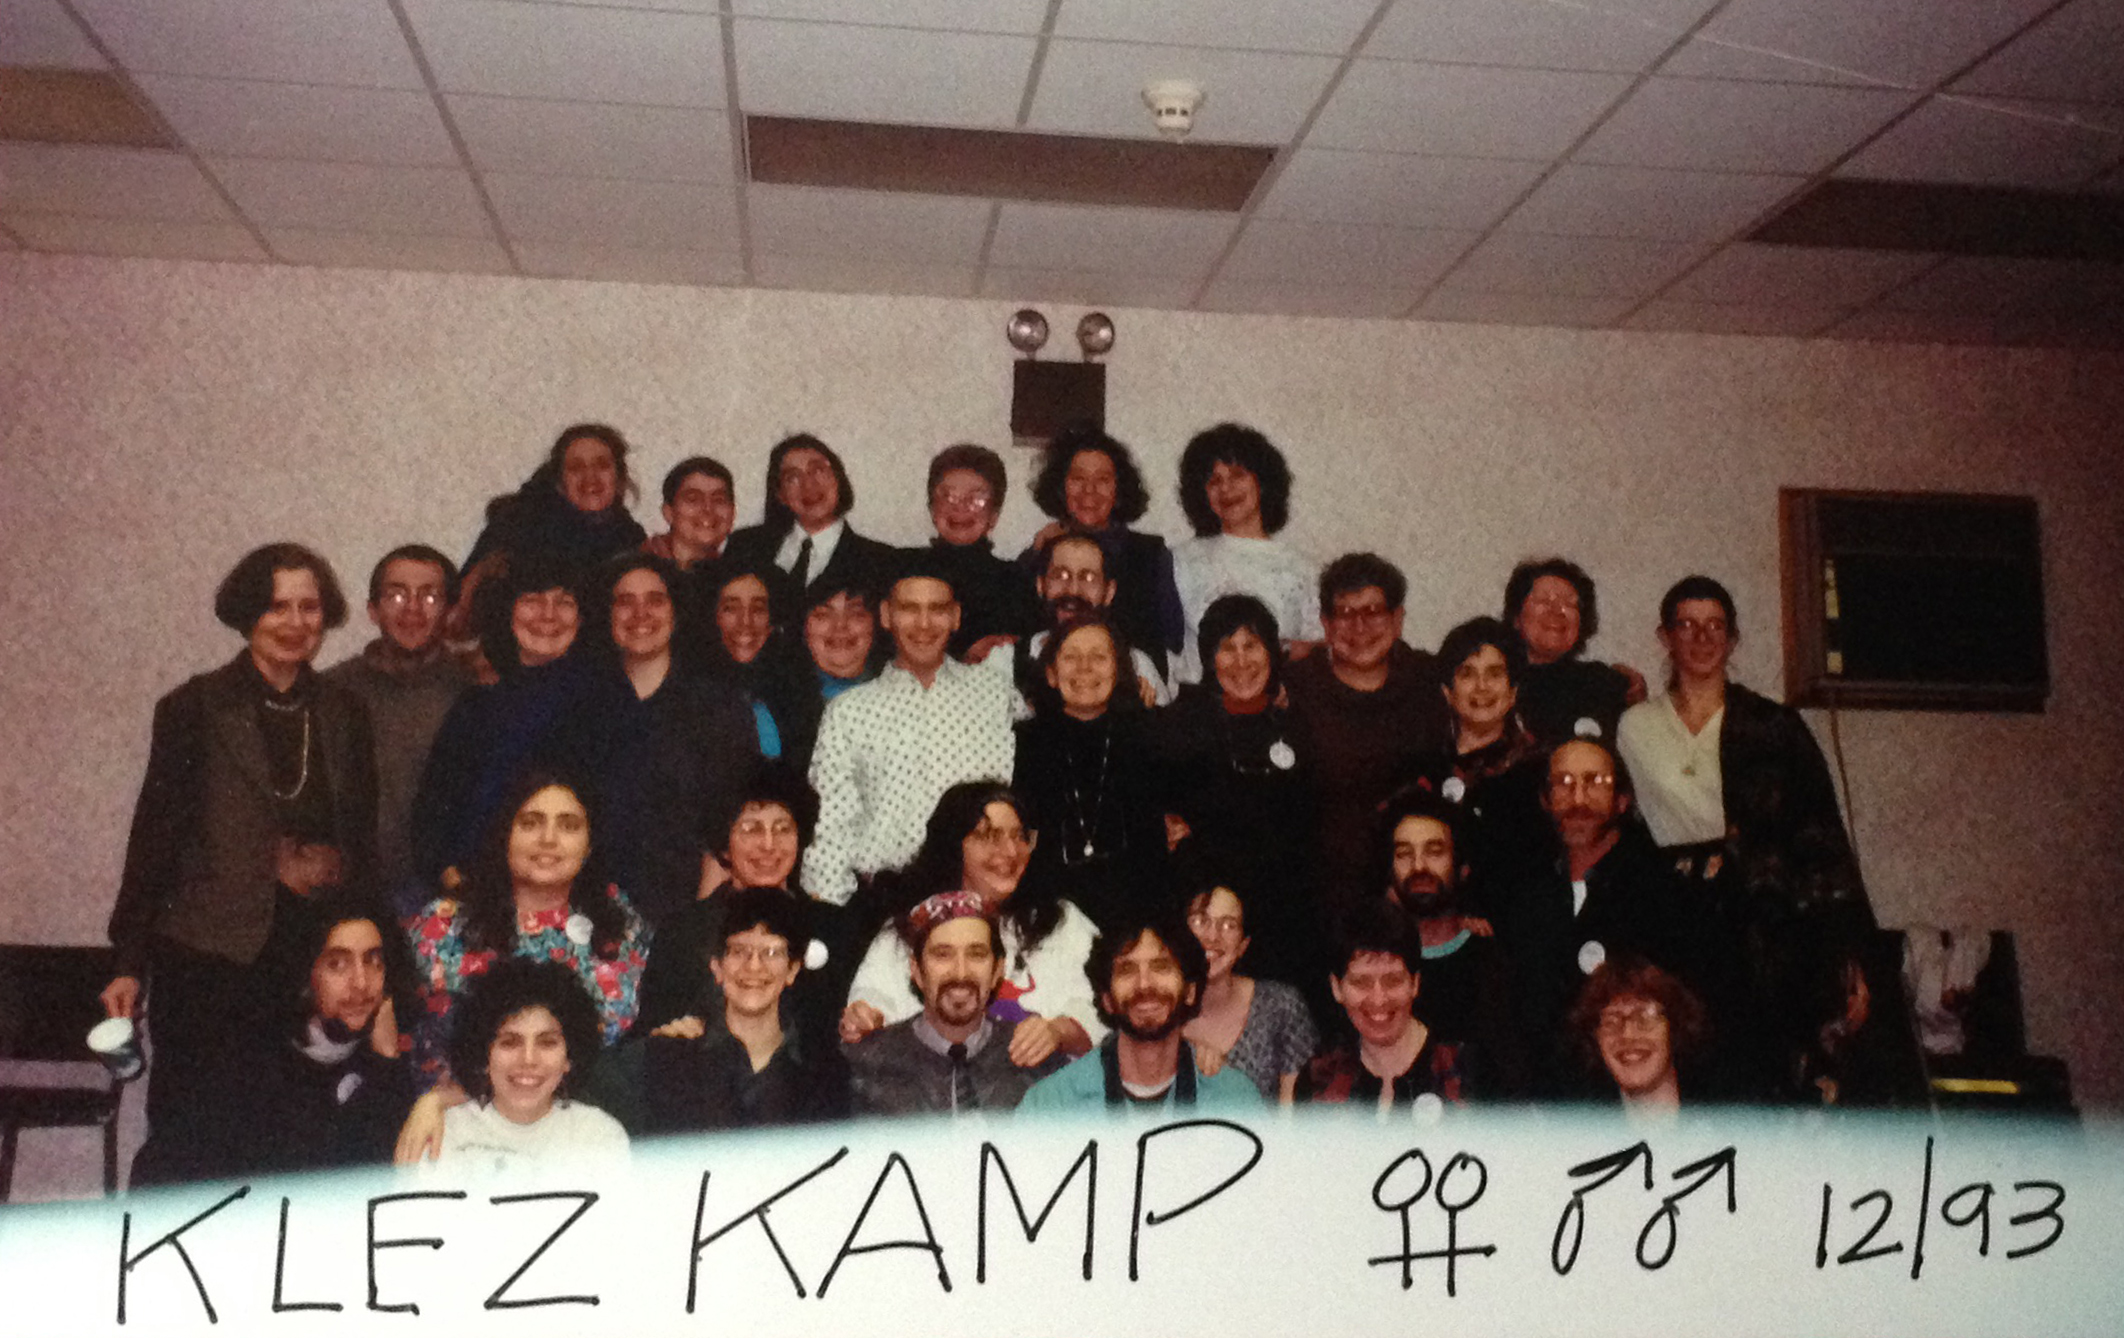 A group photo of the KlezKamp participants, December 1993.